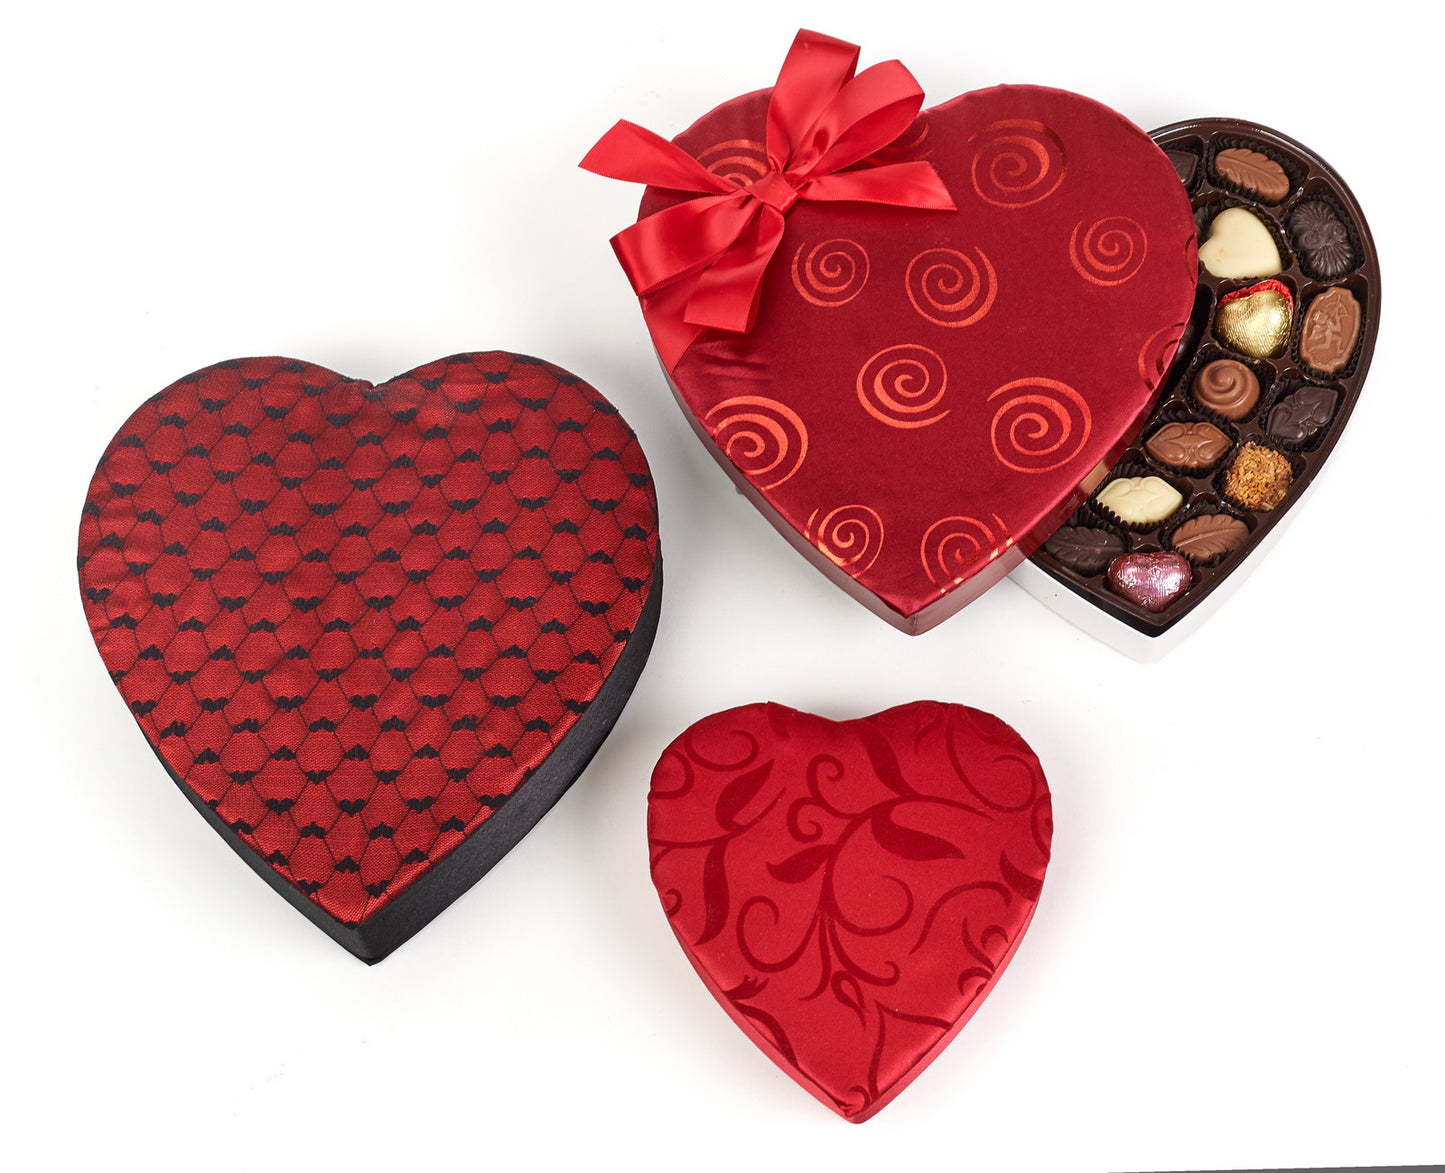 Large Heart Box of Chocolates